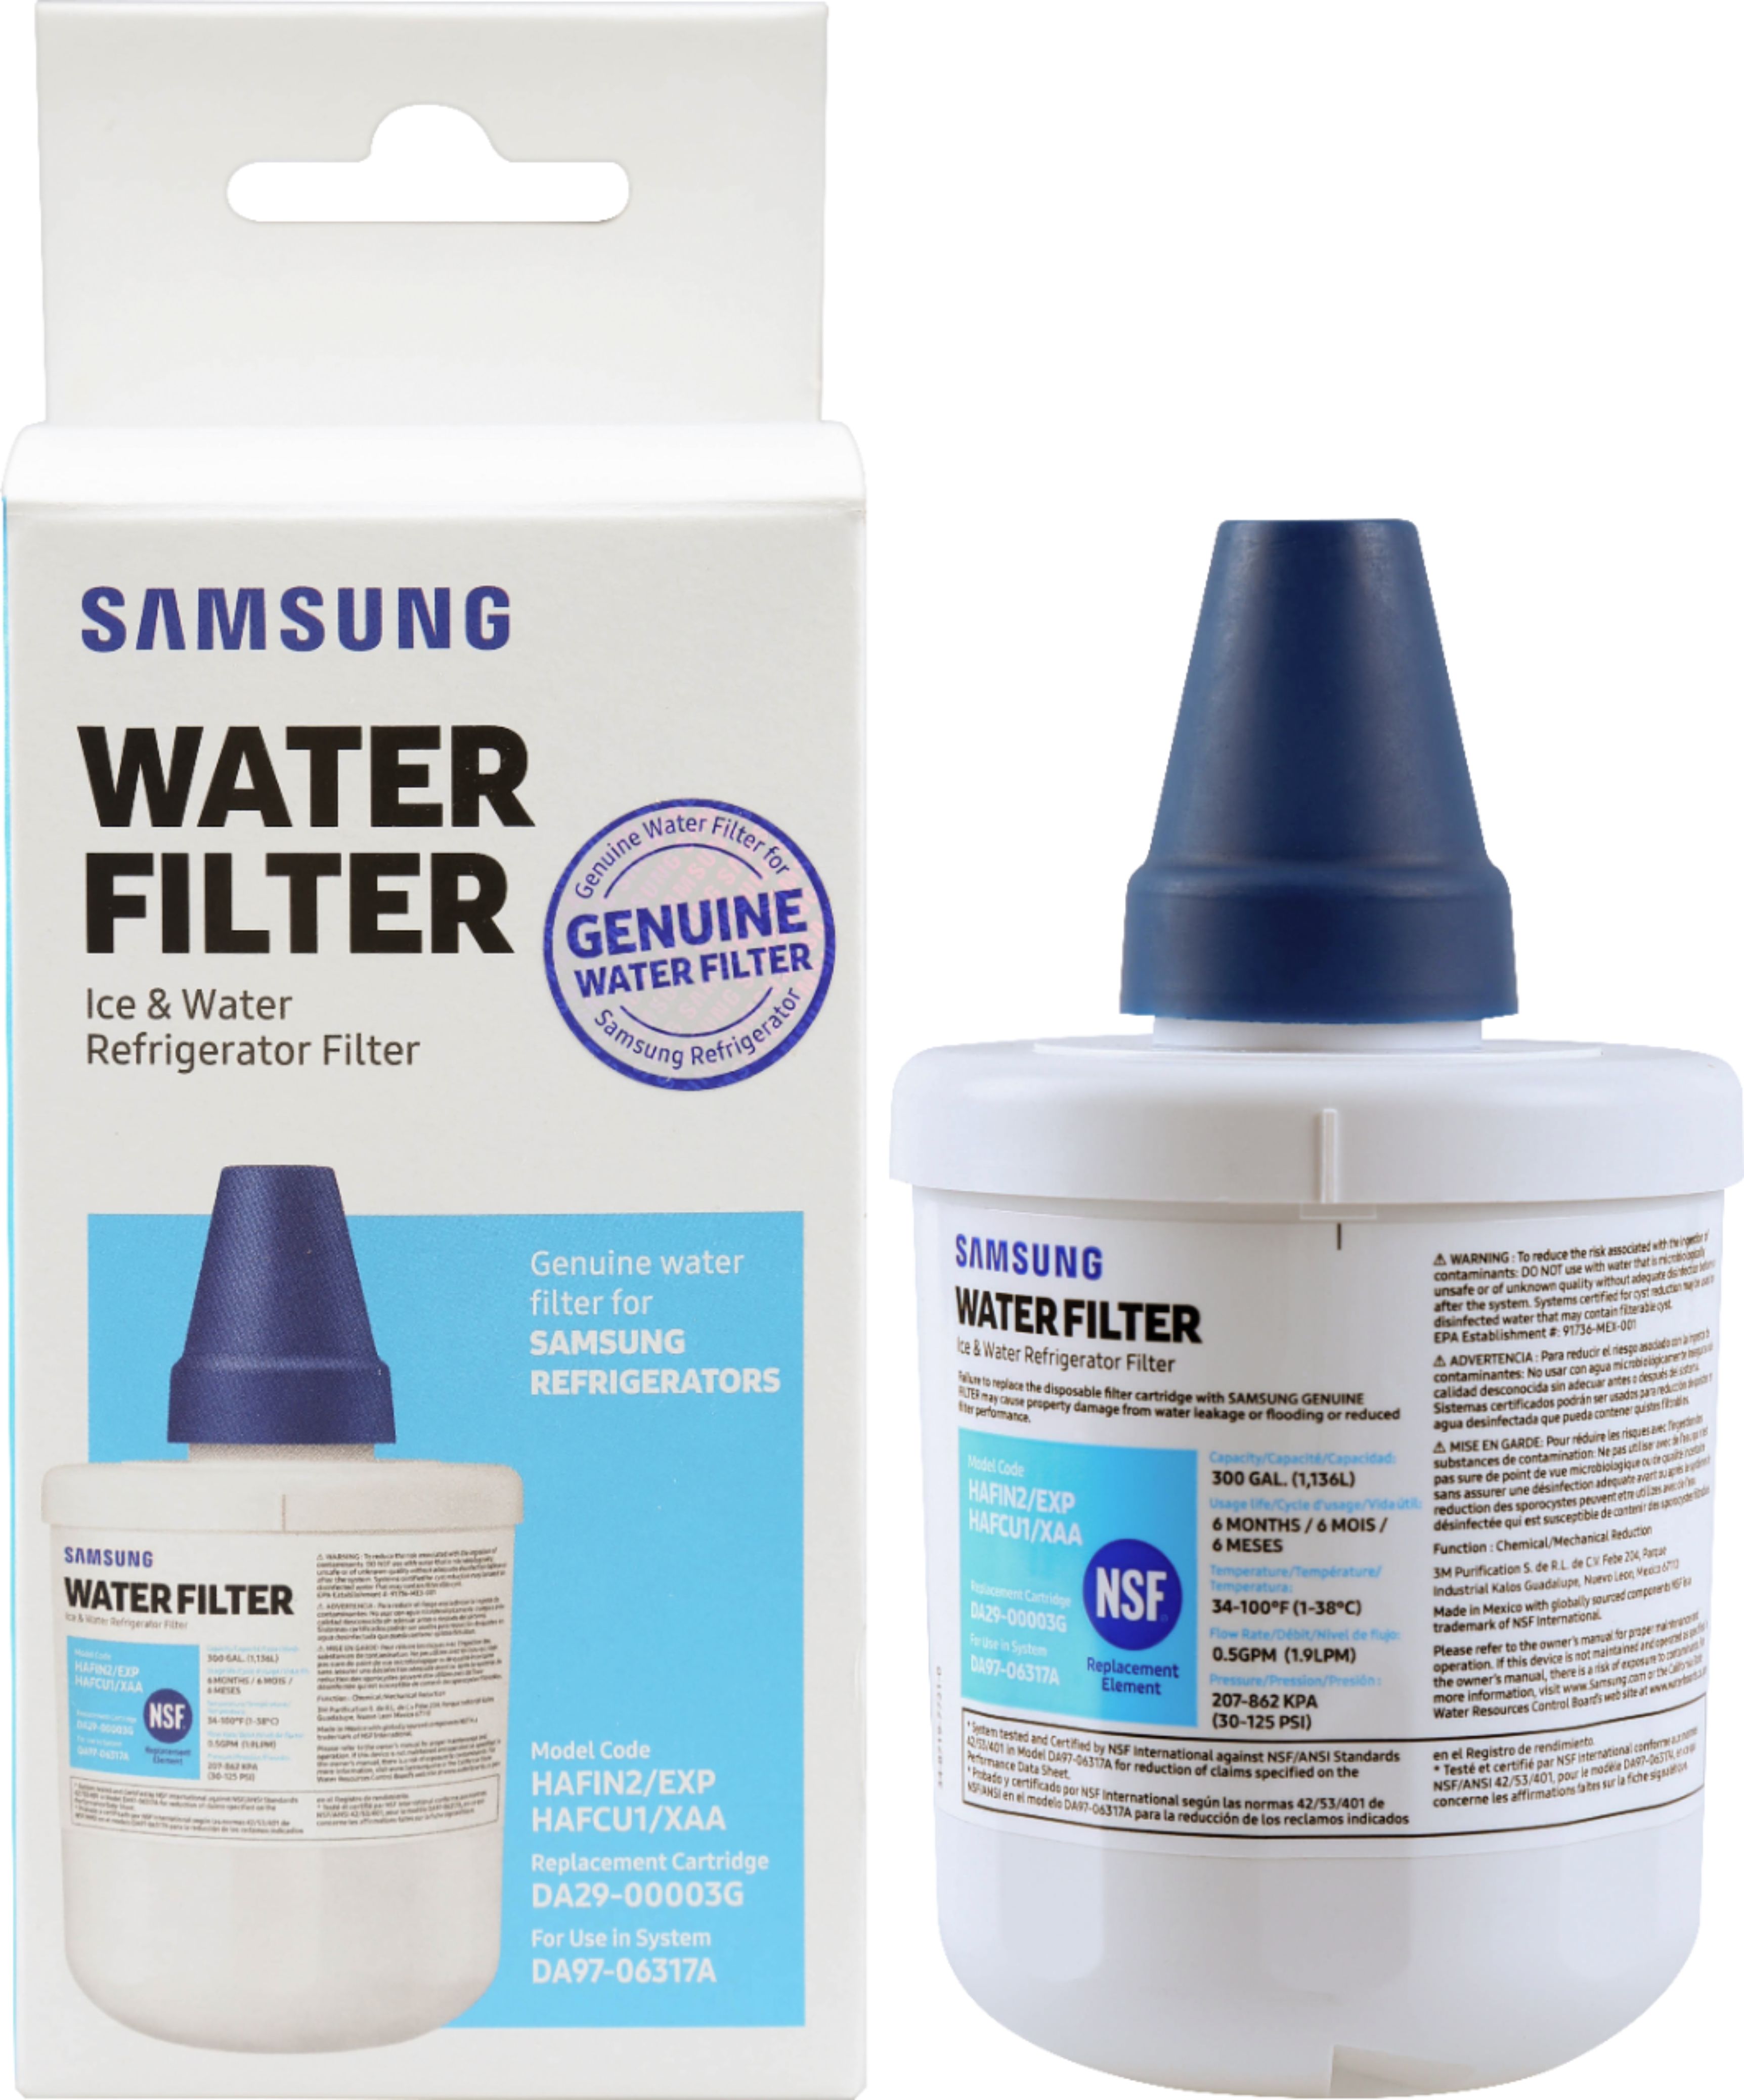 Samsung Rfg23resl Fridge Freezer Compatible Water Filter Replace Da29-00003f for sale online